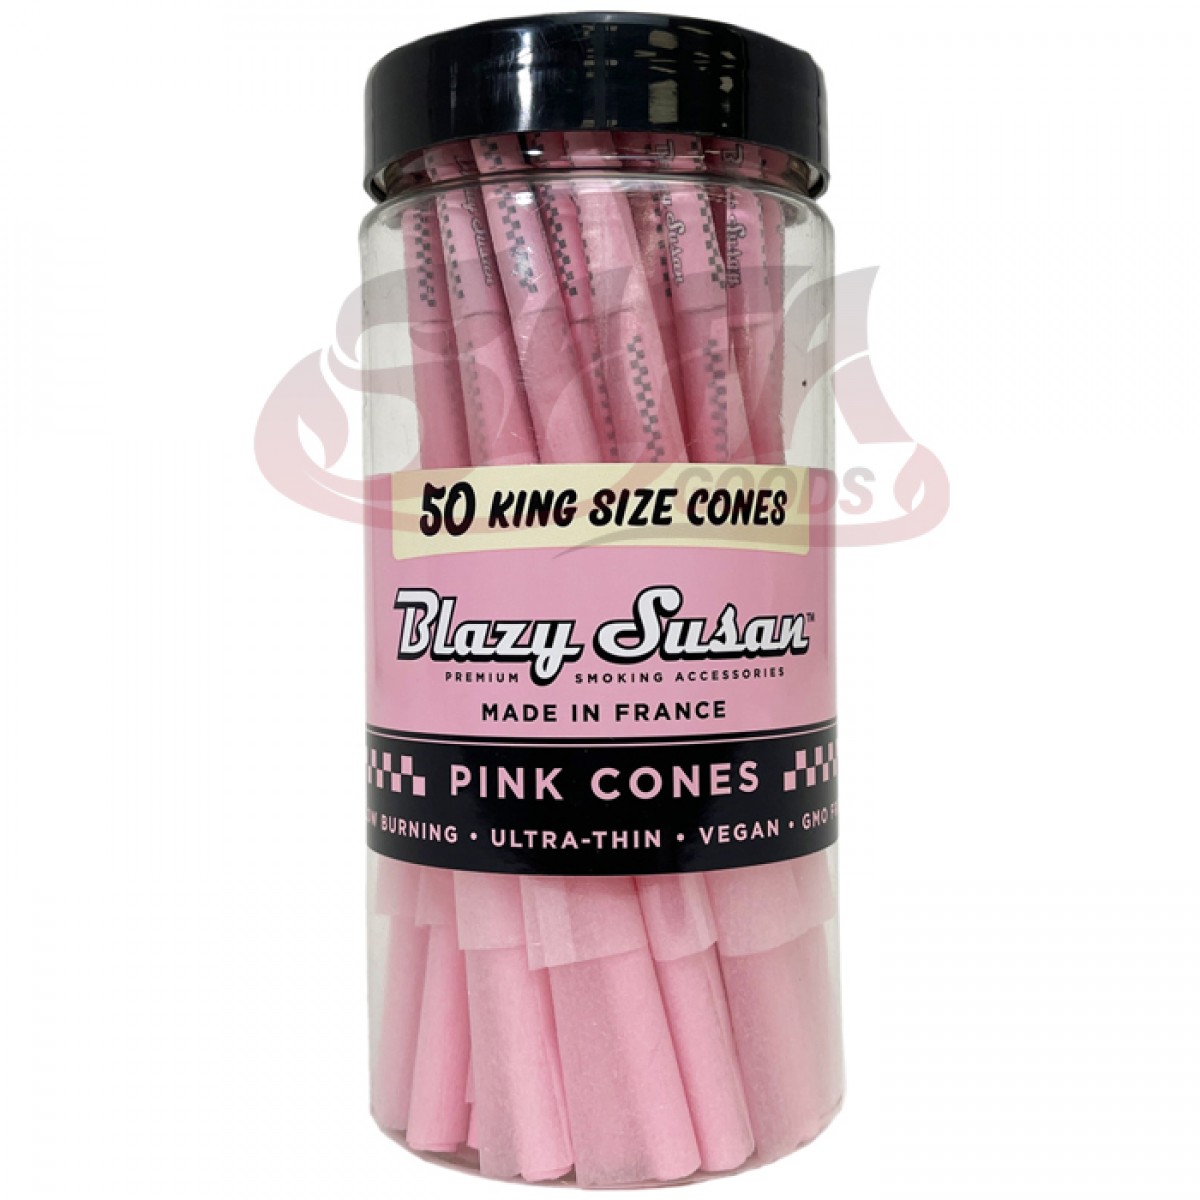 Blazy Susan - Pink Cones King Size - 50CT Jar